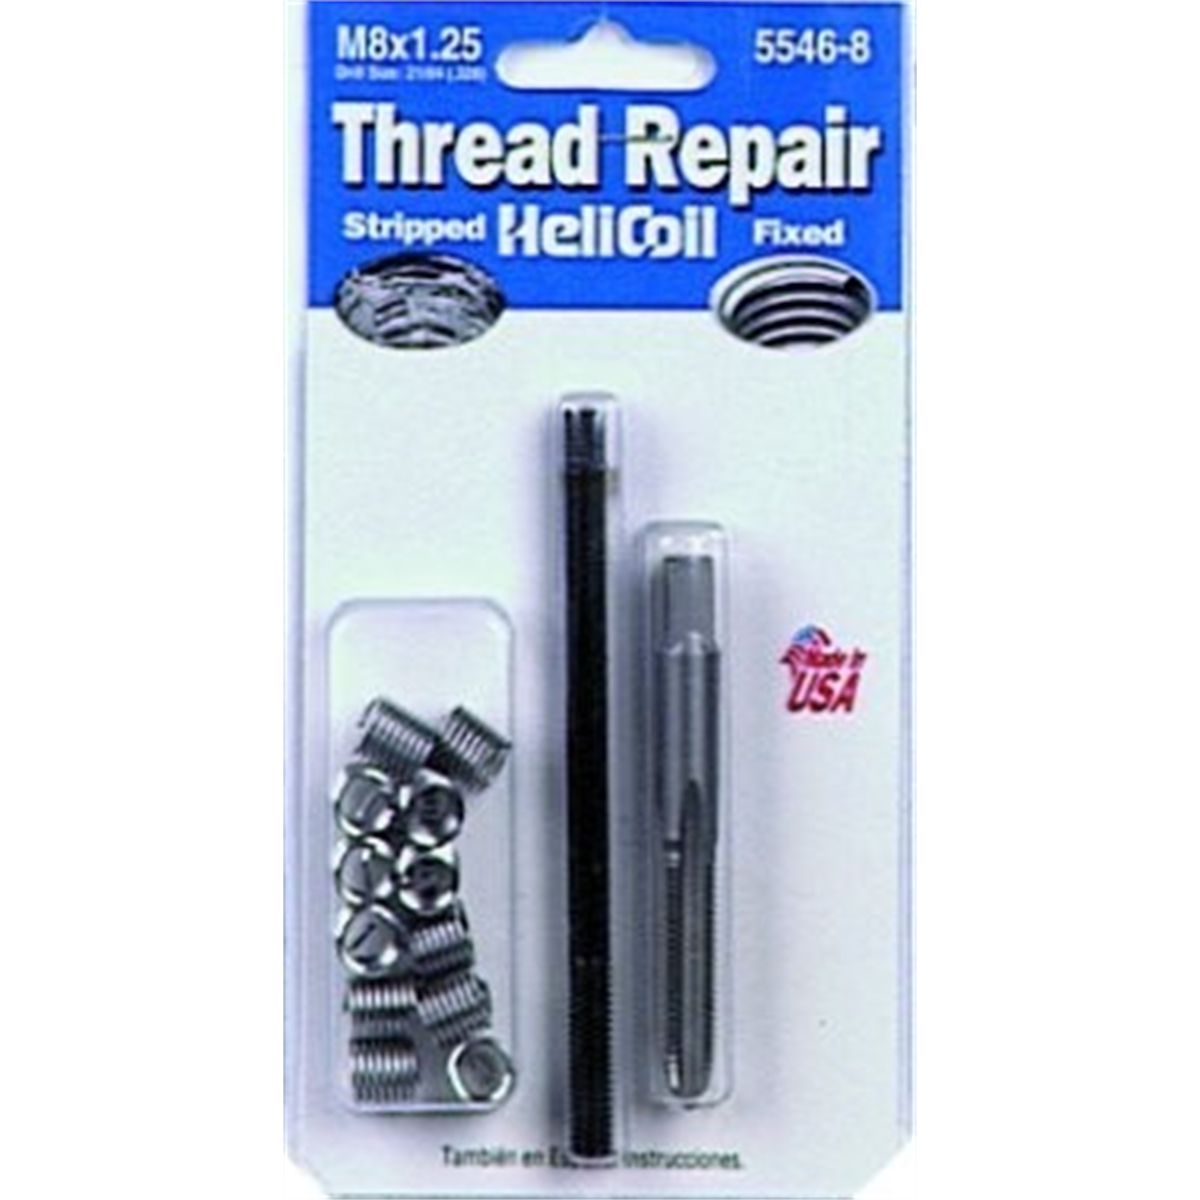 Perma Coil 1221-308 Metric Thread Repair Insert Kit M8x1.25 Helicoil 5546-8 